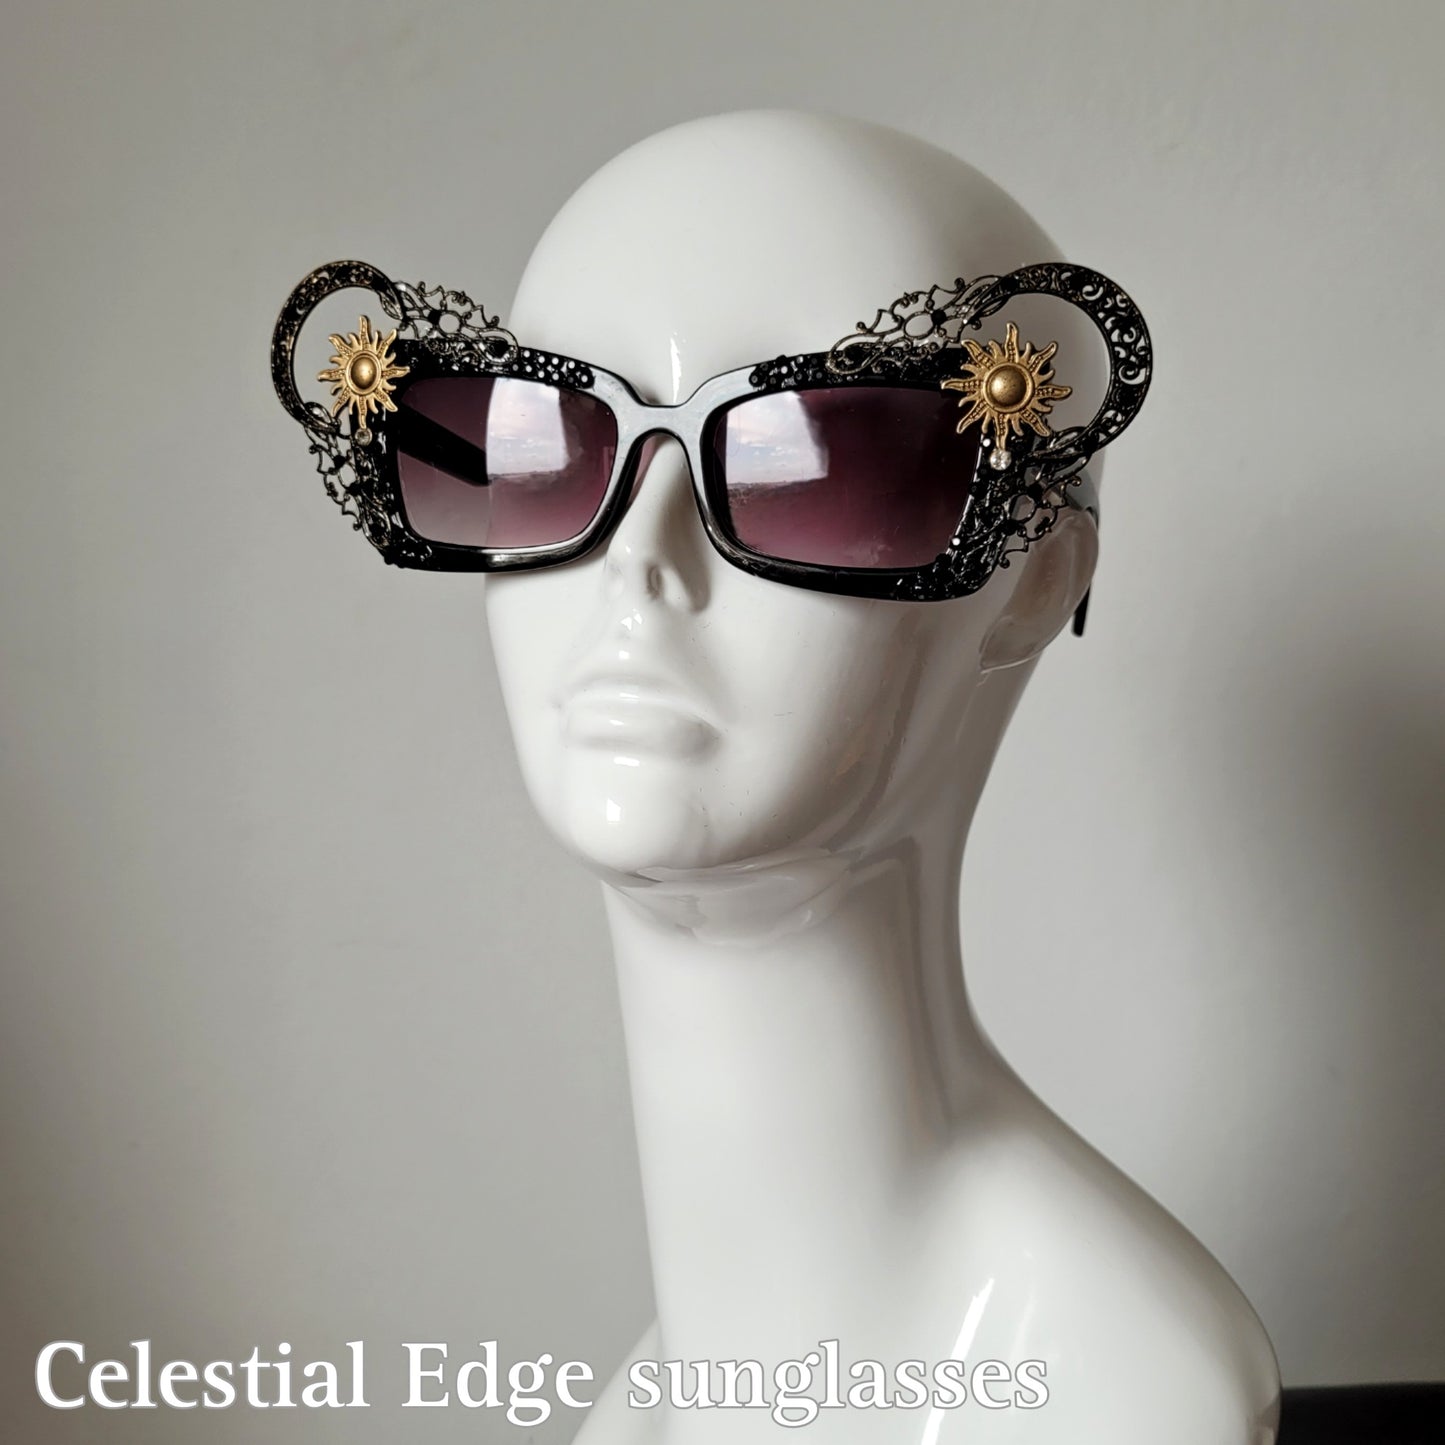 Midnight Garden Collection: The Celestial Edge Sunglasses